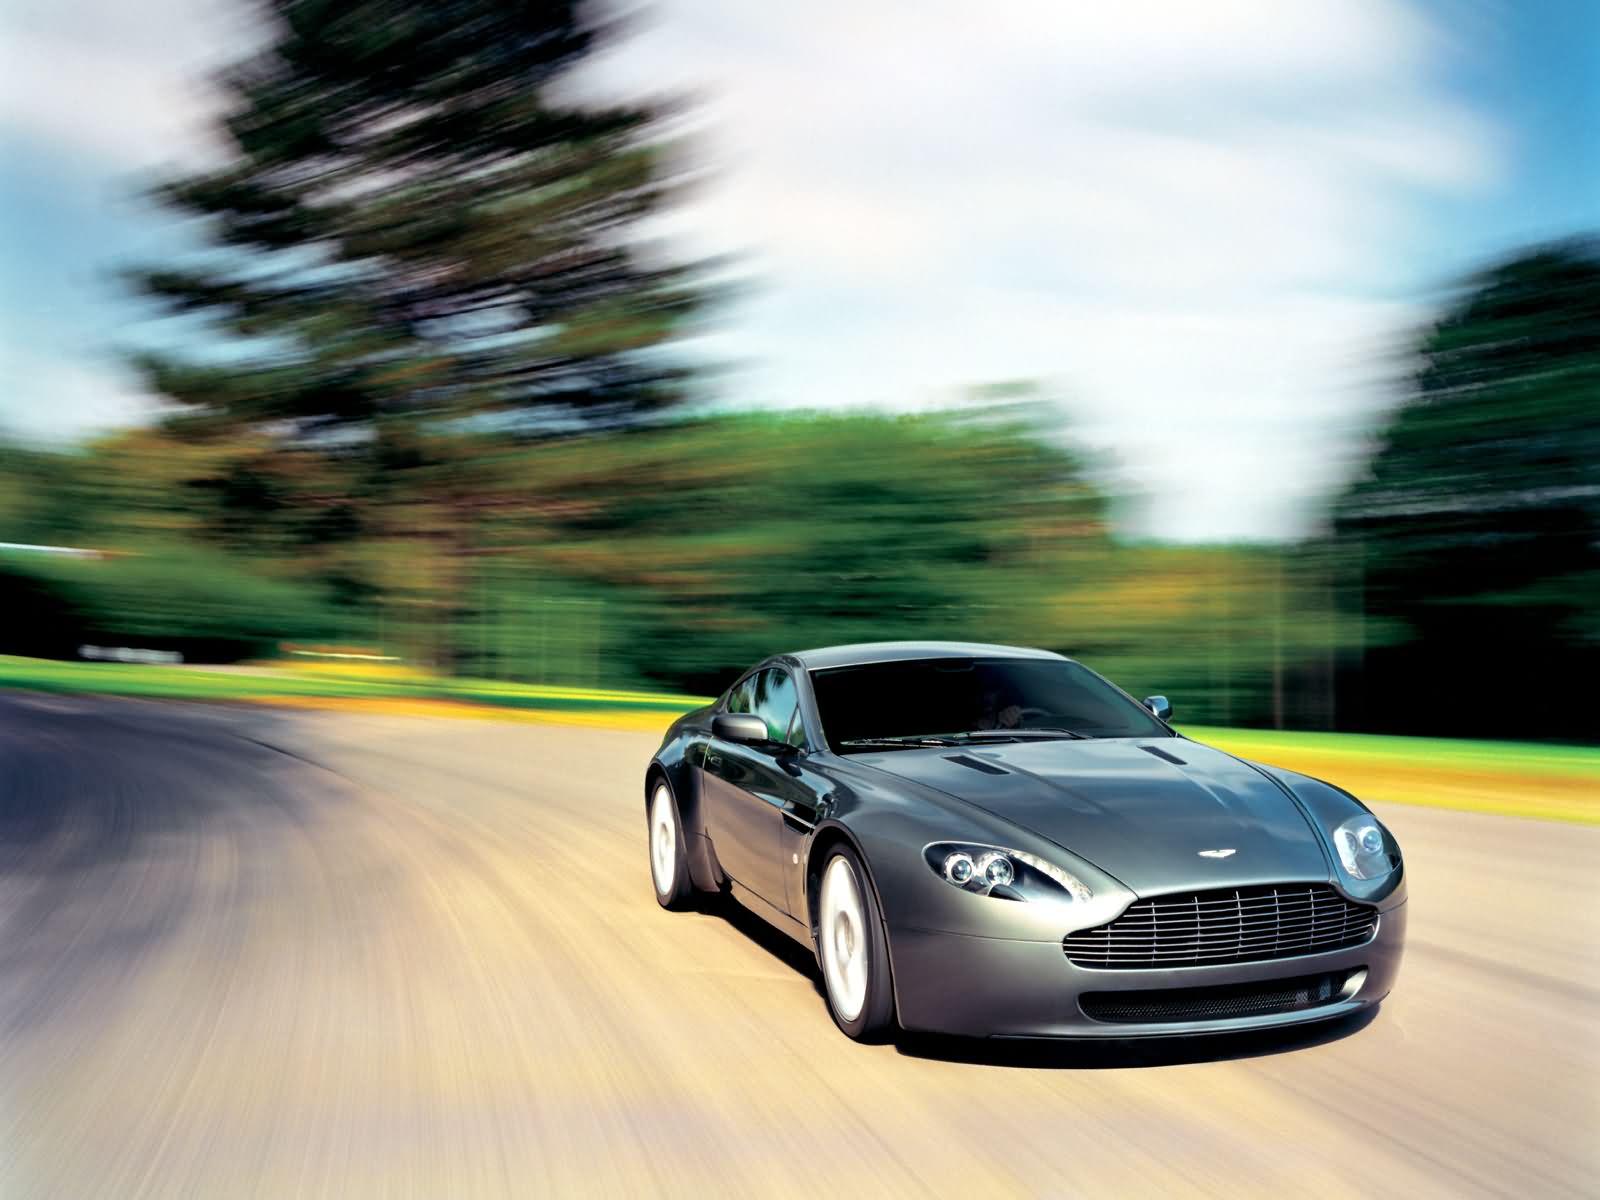 Aston Martin V8 Vantage Wallpaper HD. World's Greatest Art Site